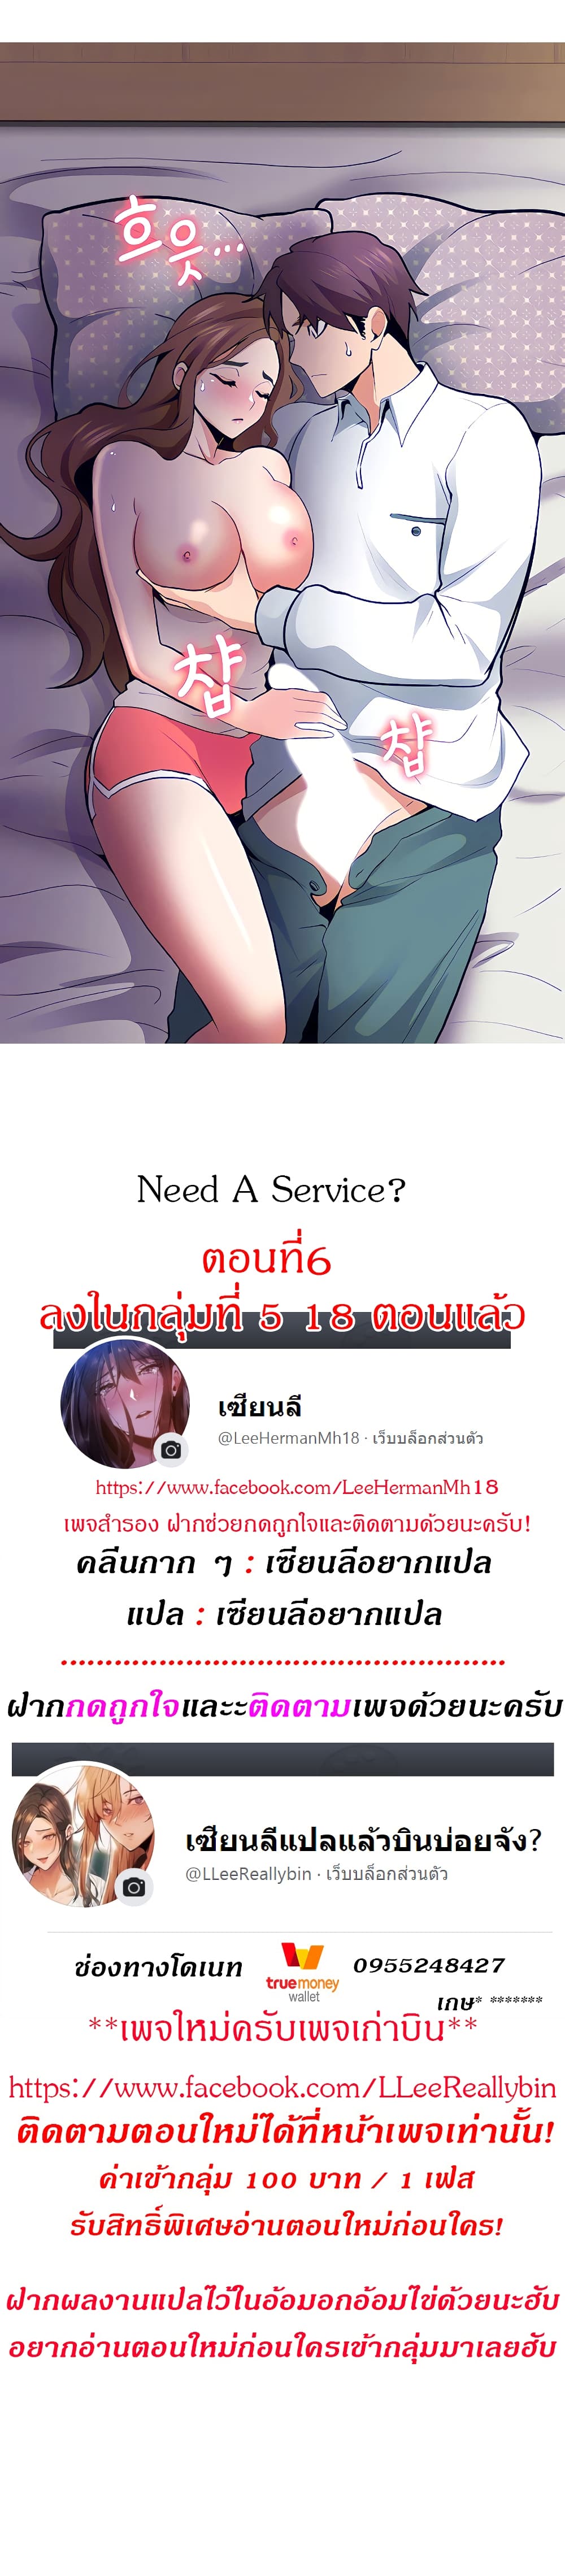 Need A Service? 6-6